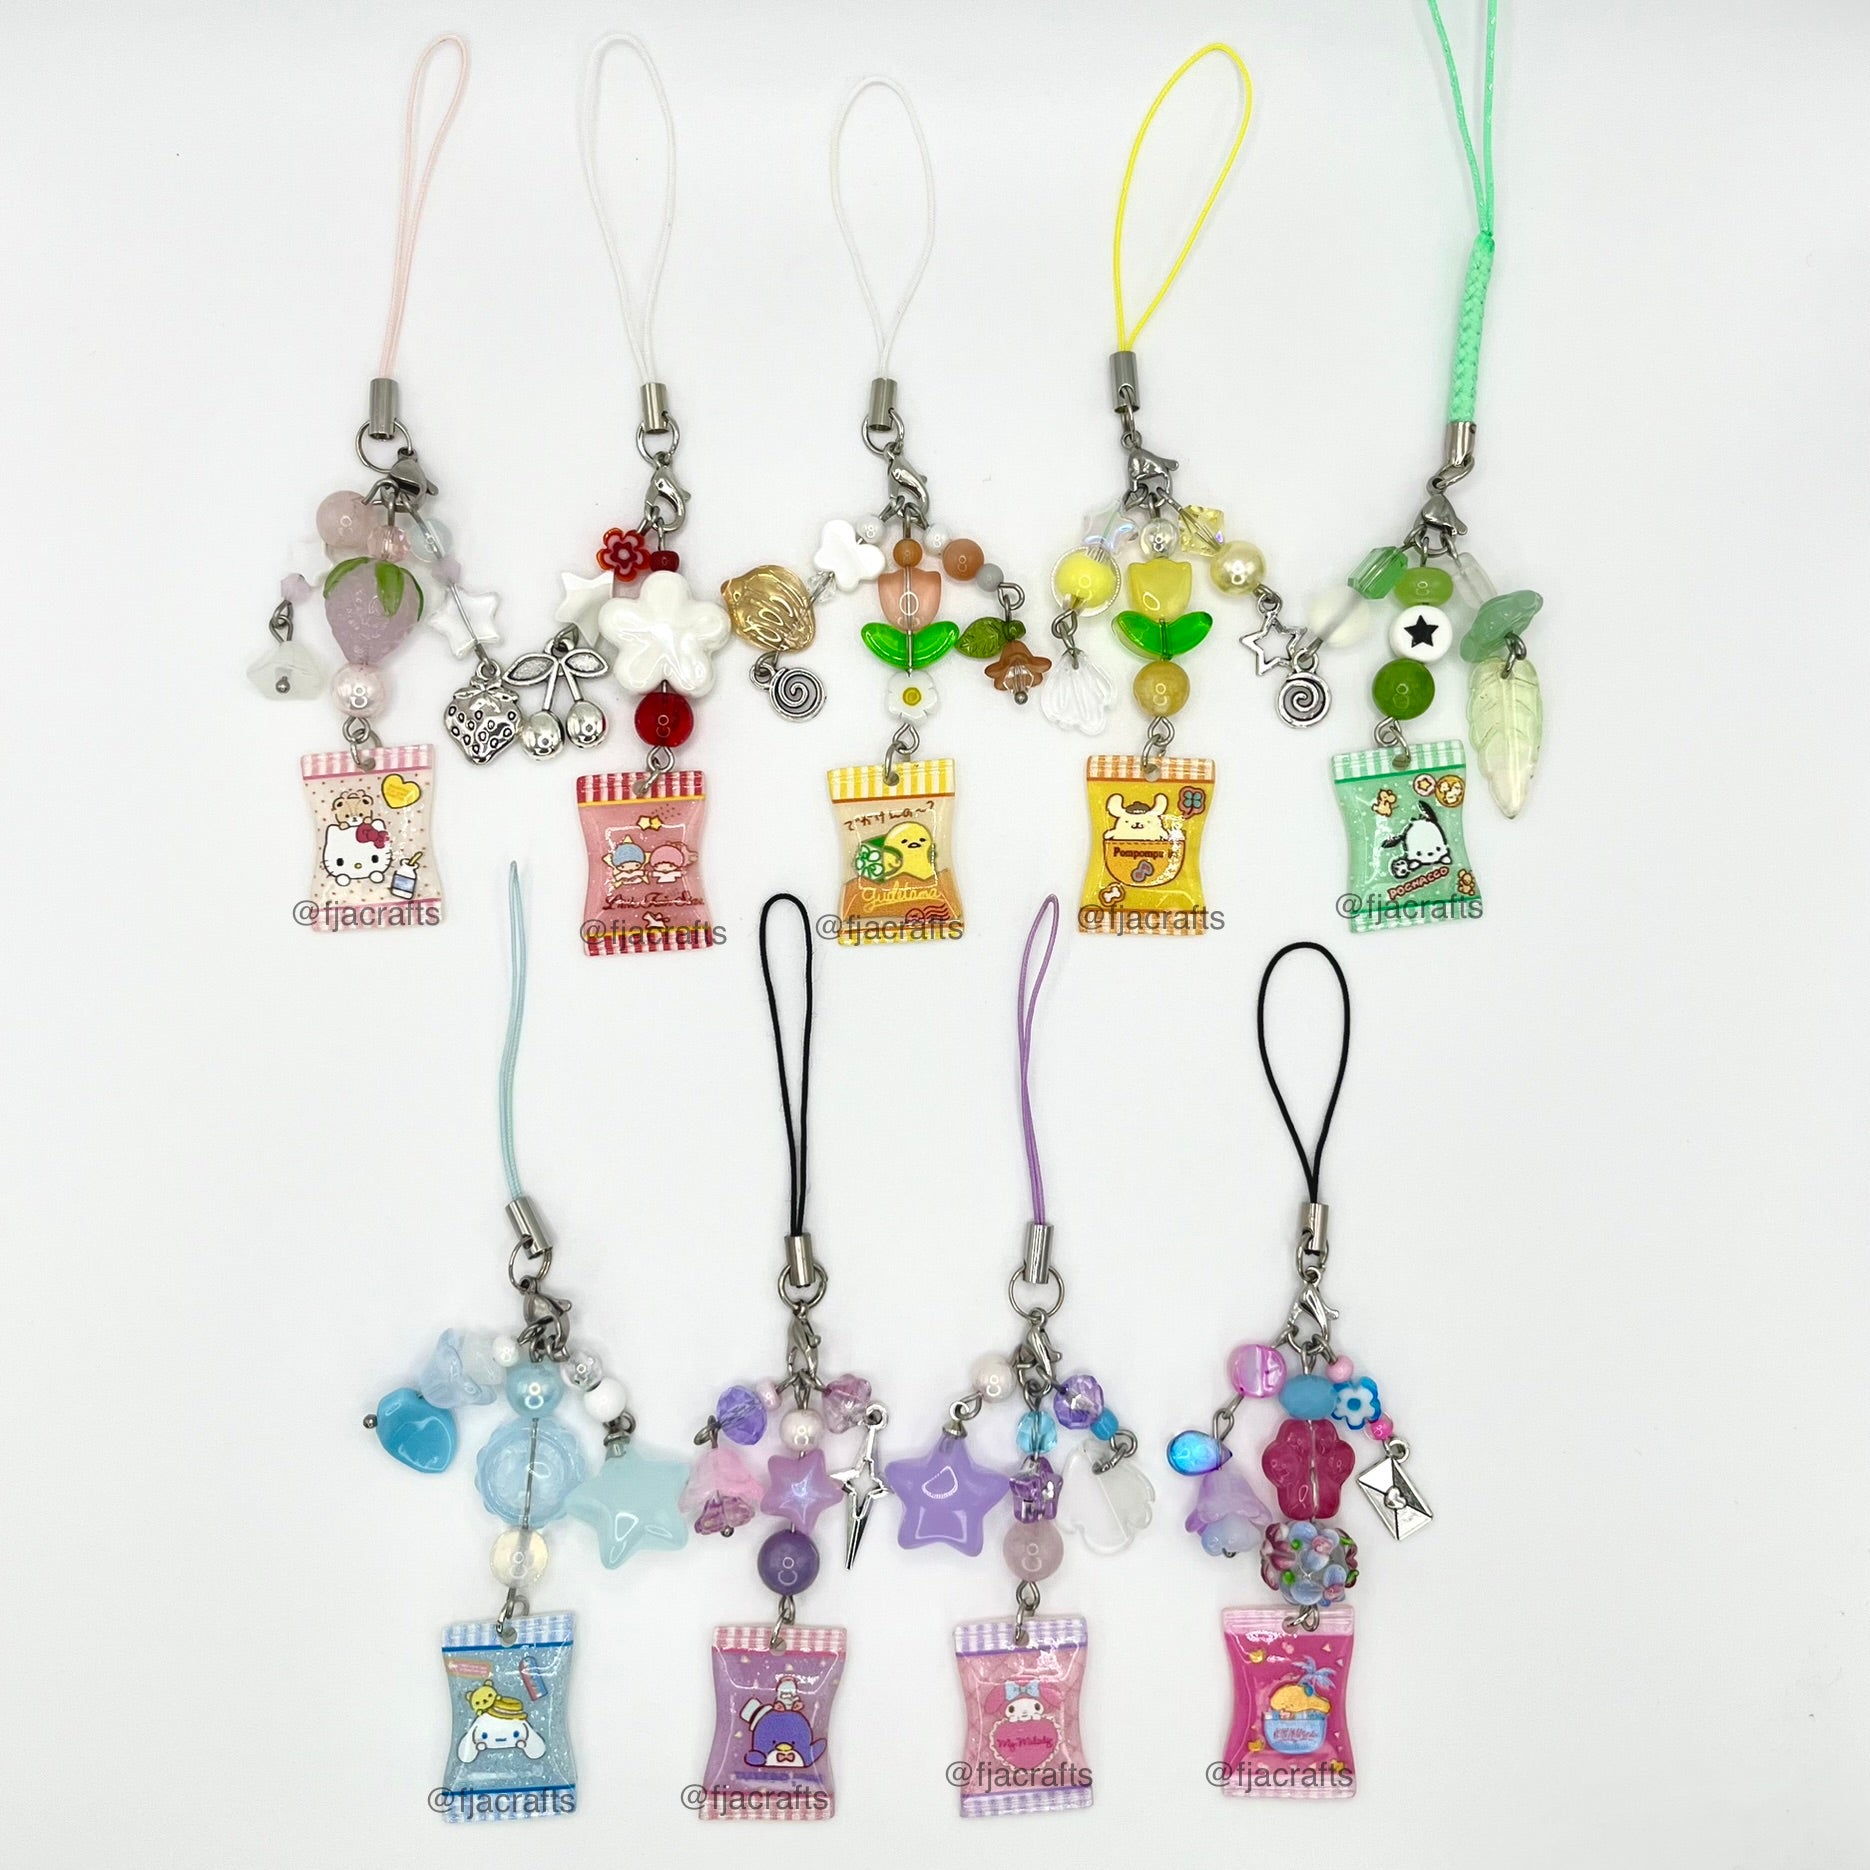 Kawaii Friends Characters Phone Charms | rainbow, red, pink, blue, purple FJA Crafts